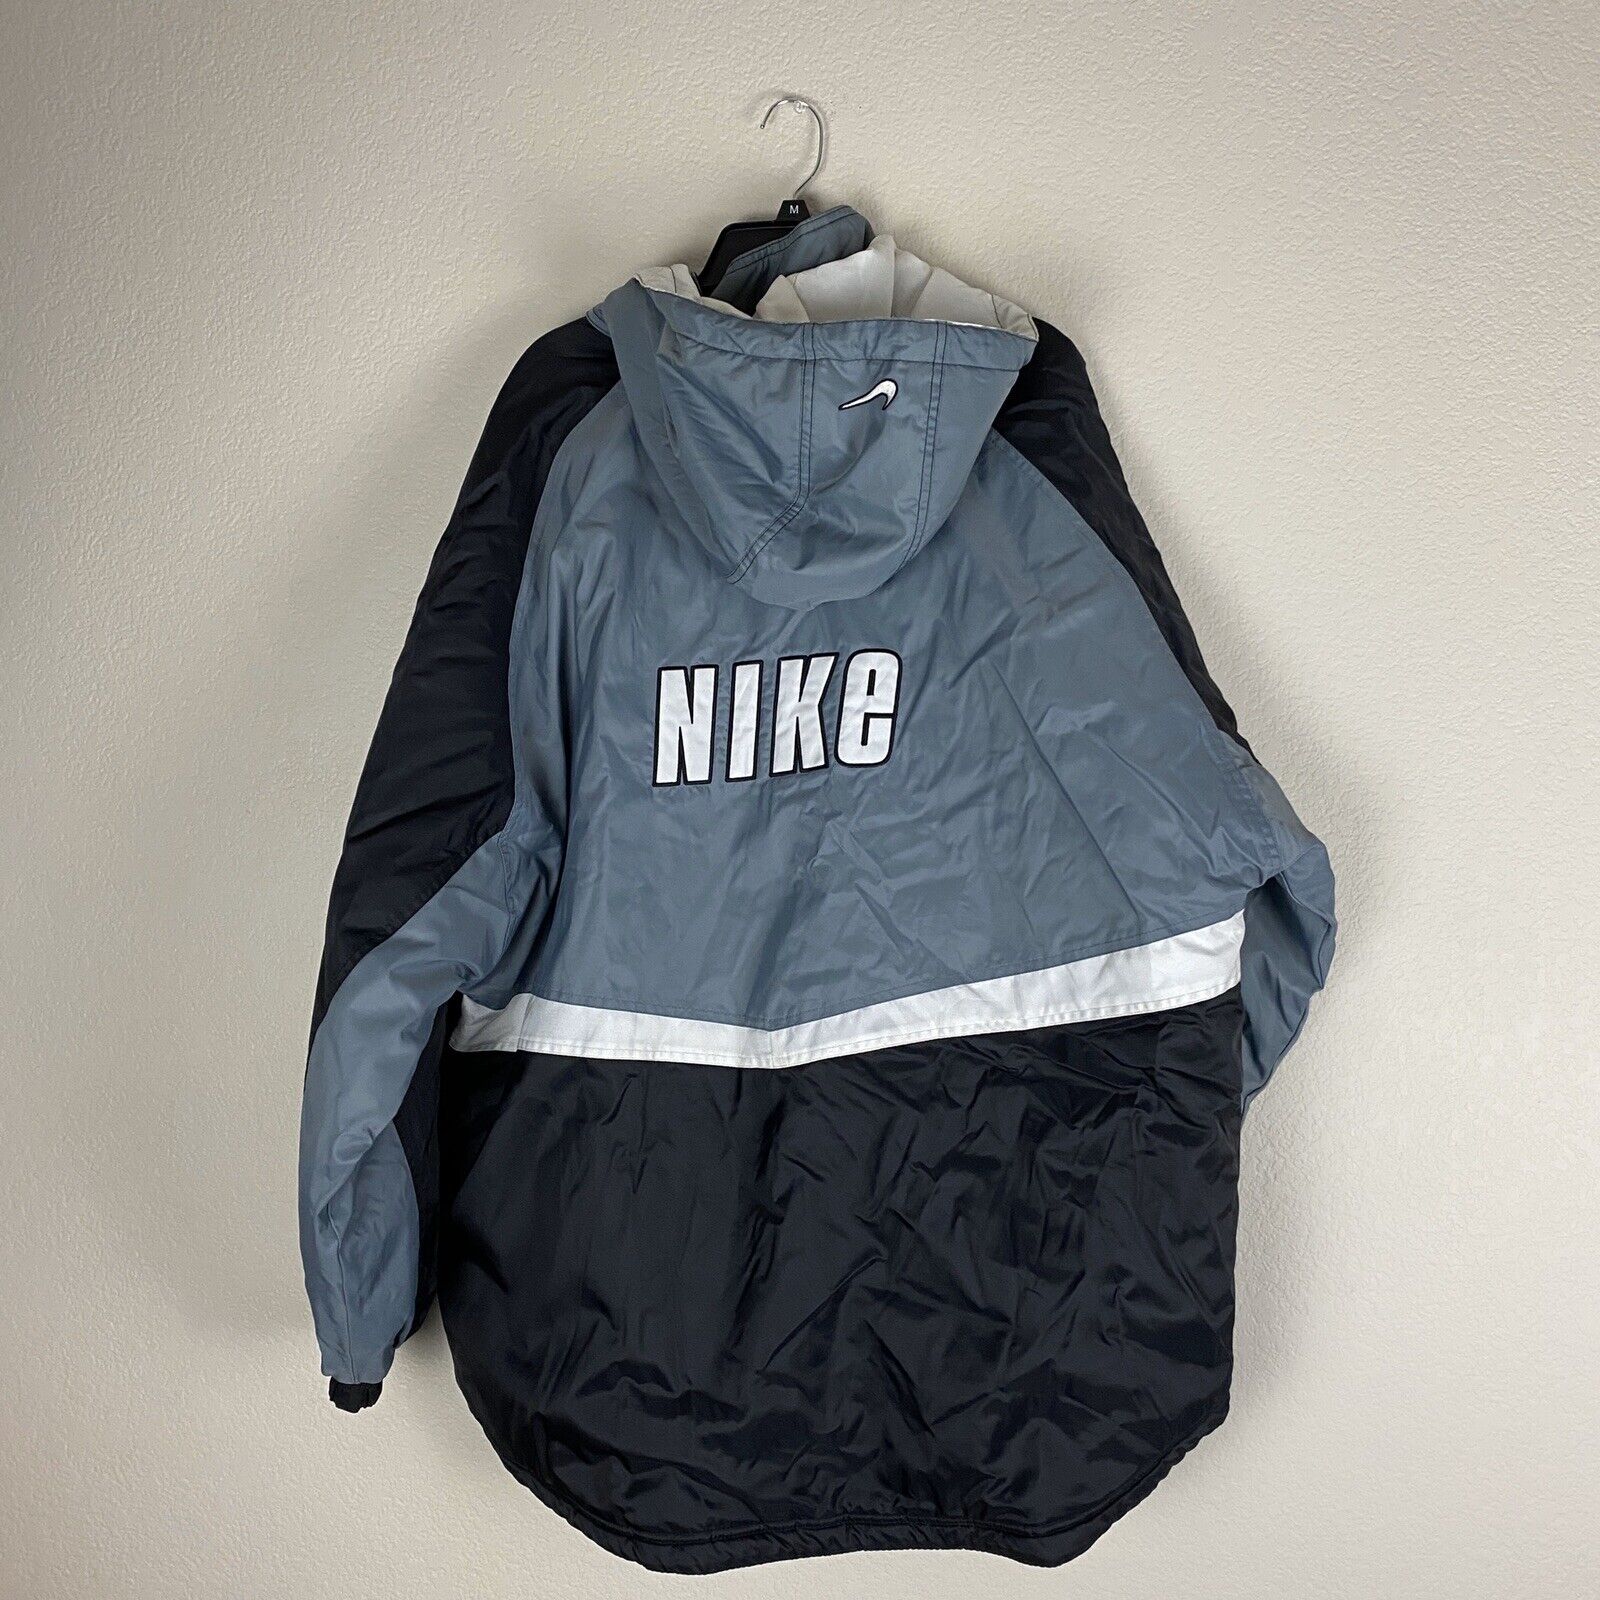 Nike Vintage Jacket Quilted Lined Coat Mens Size Large